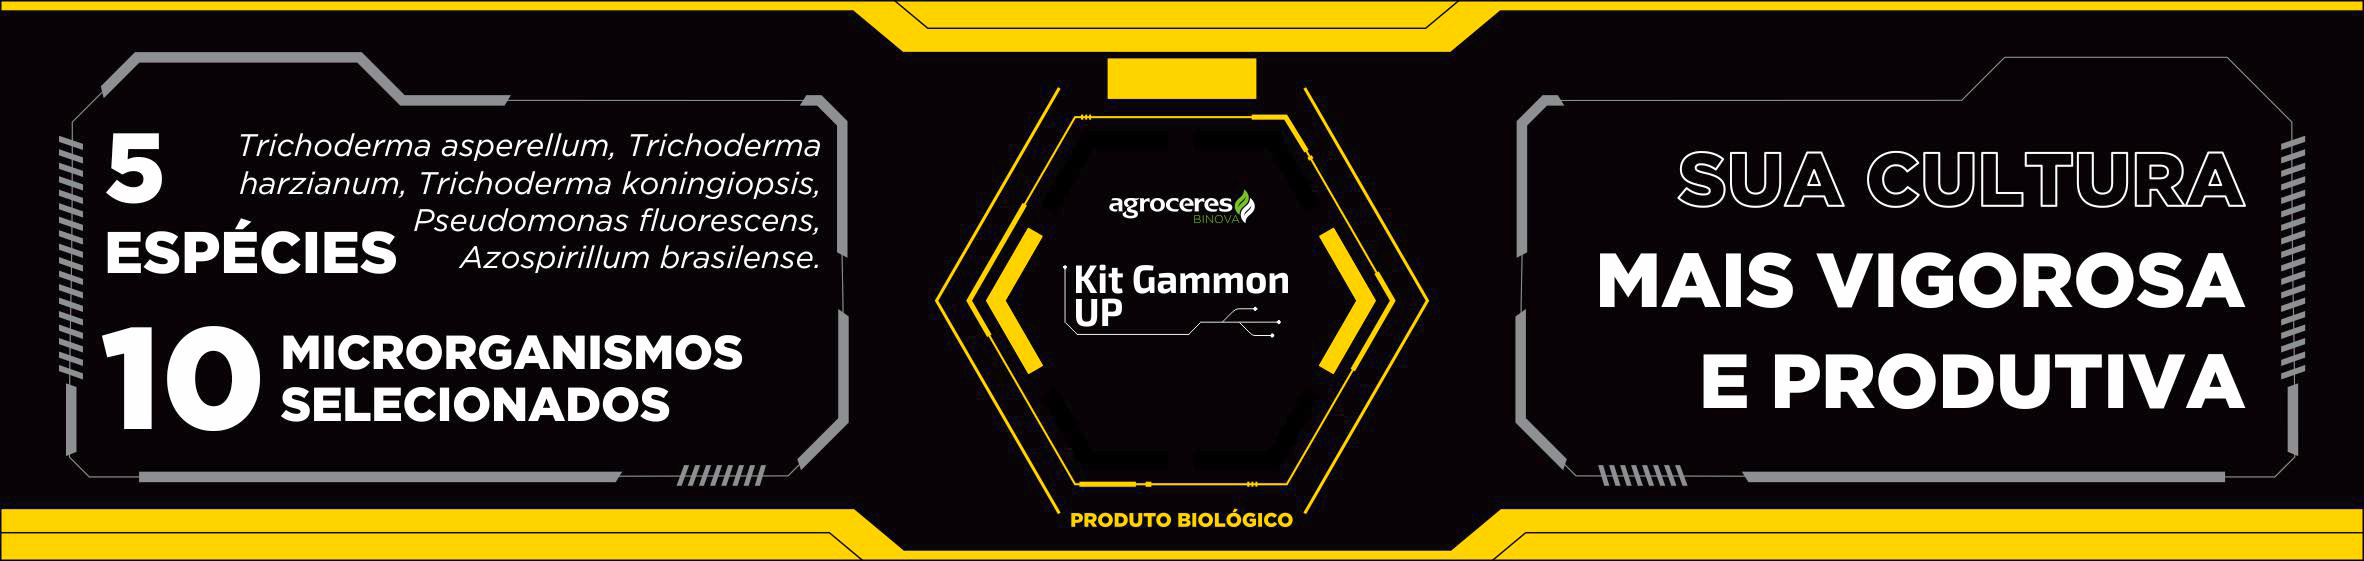 Banner - Kit Gammon UP